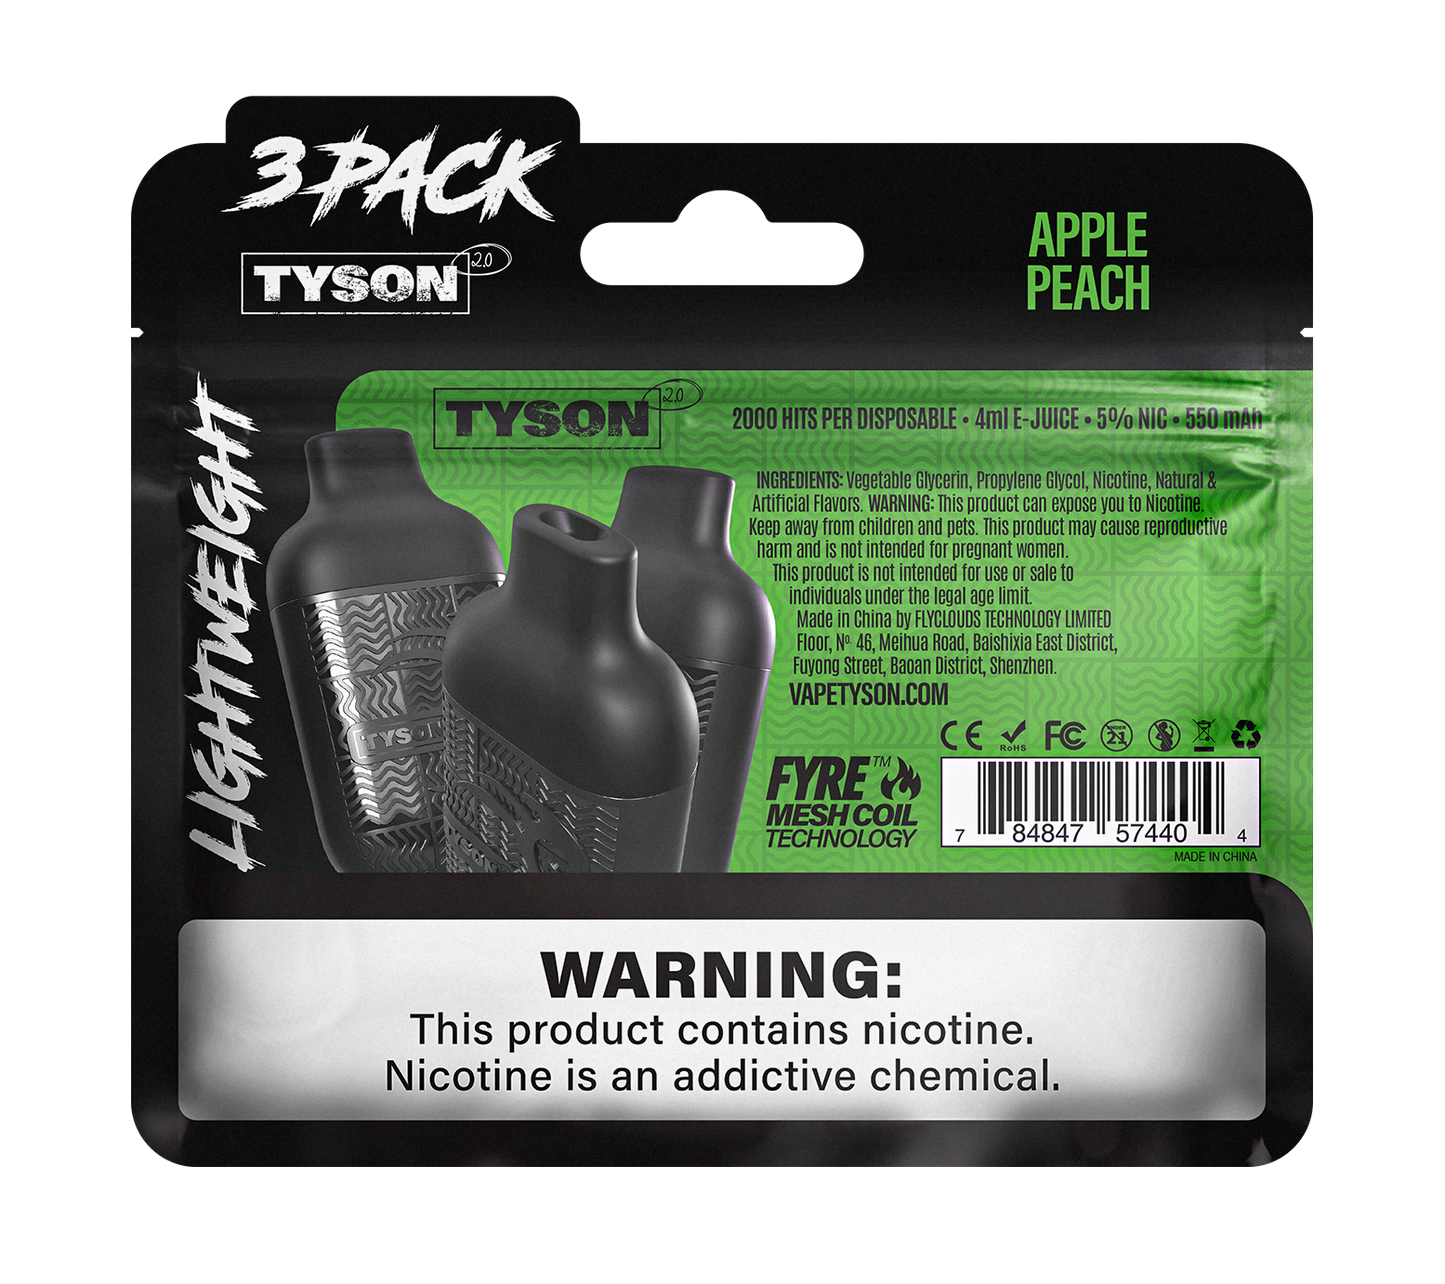 Tyson 2.0 Lightweight 6000 Hits 3 Pack Vape - Apple Peach